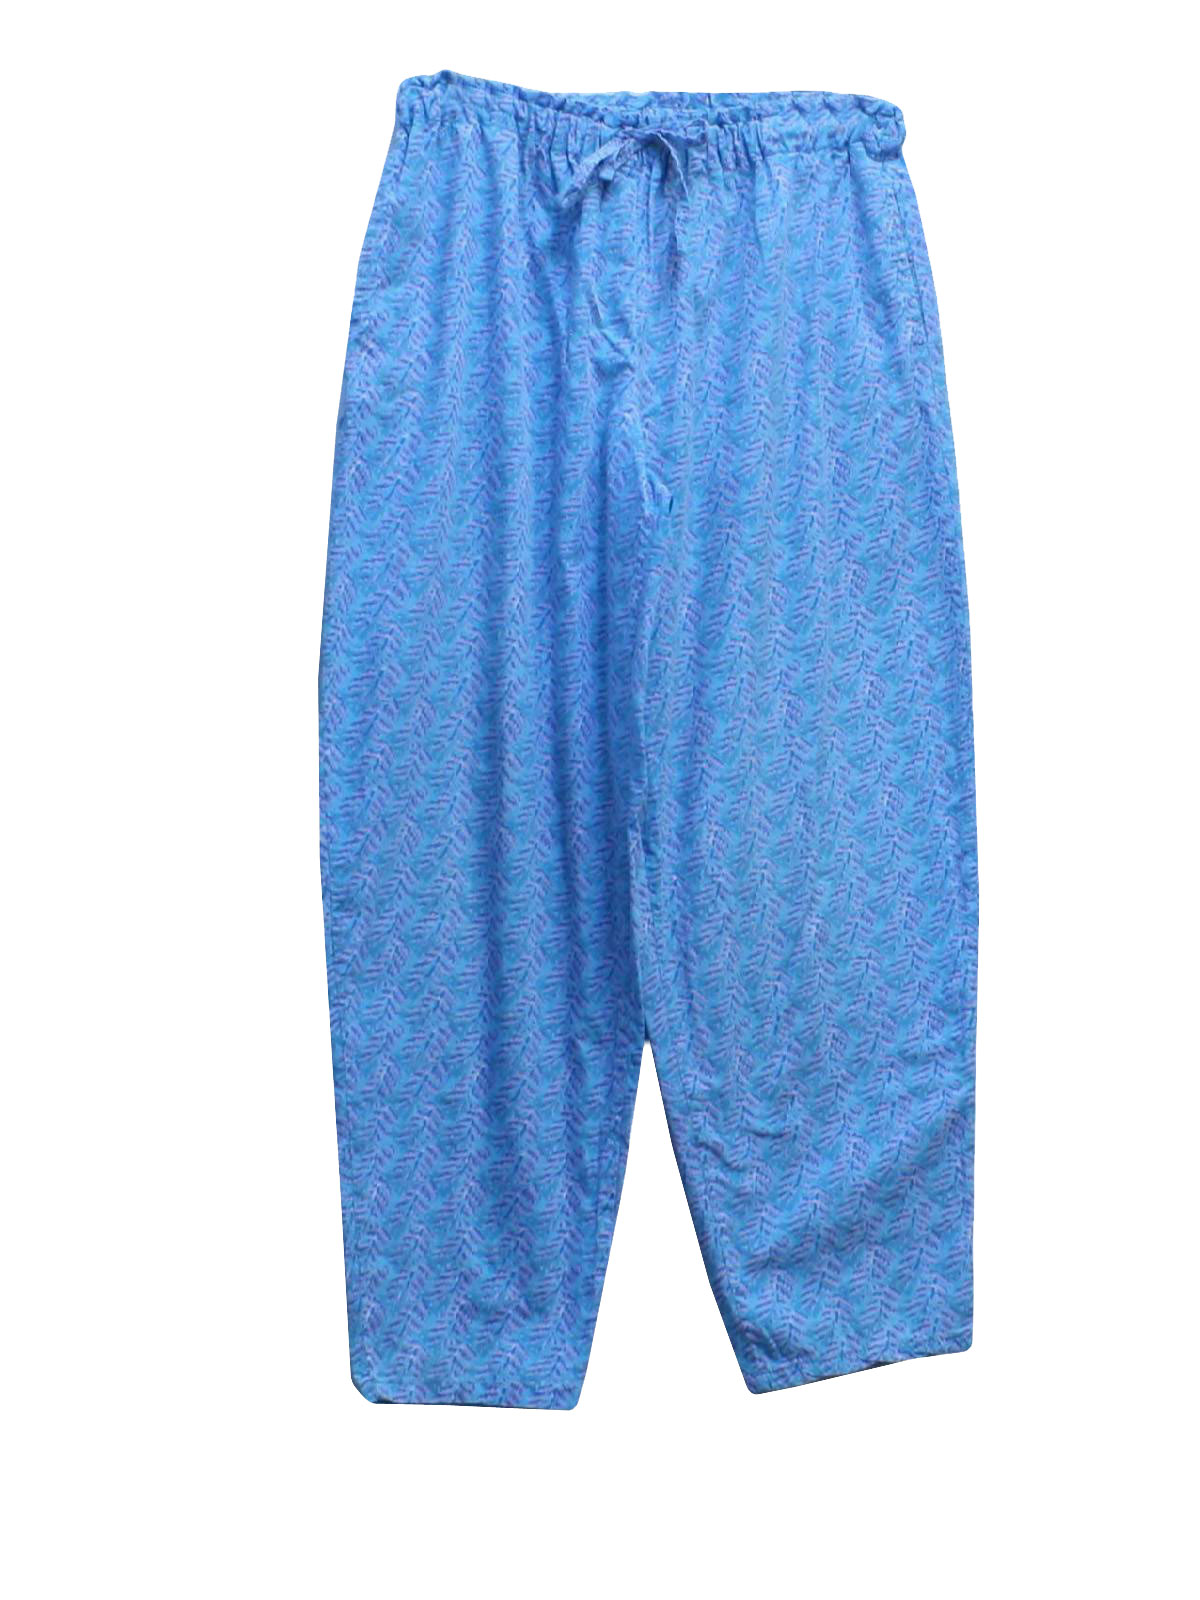 Vintage LLBean 1980s Pants: 80s -LLBean- Mens teal blue background with ...